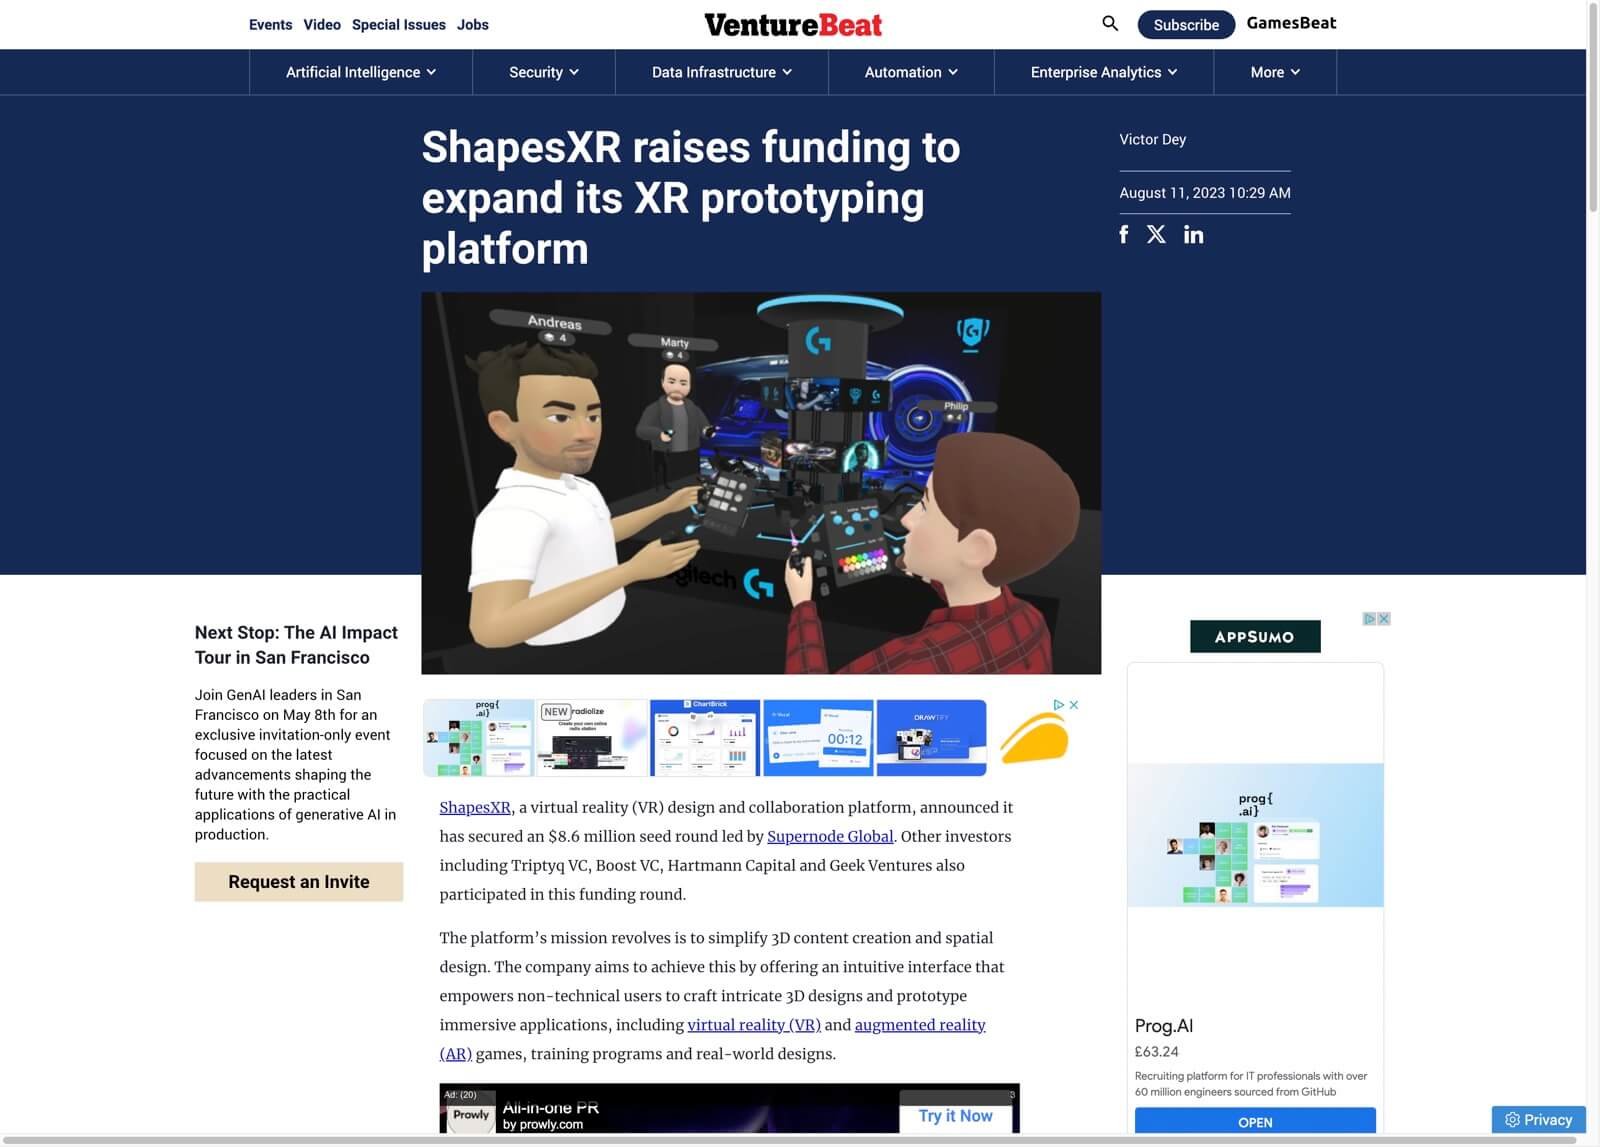 VentureBeat-ShapesXR-raises-funding-to-expand-its-XR-prototyping-platform-VentureBeat.jpg